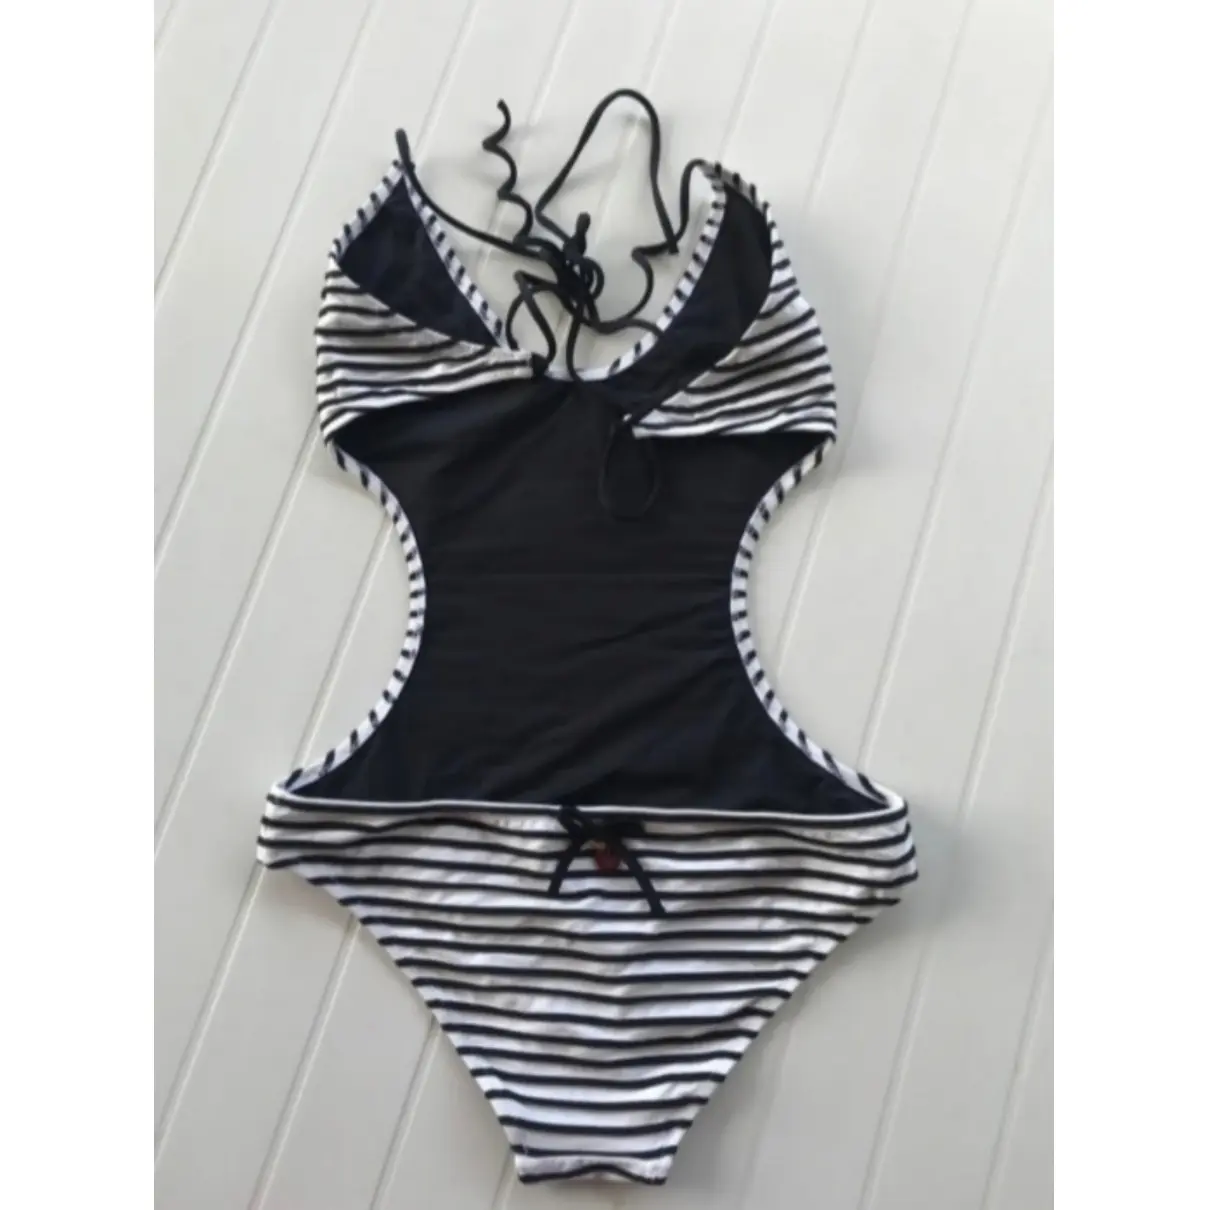 Buy Fendi One-piece swimsuit online